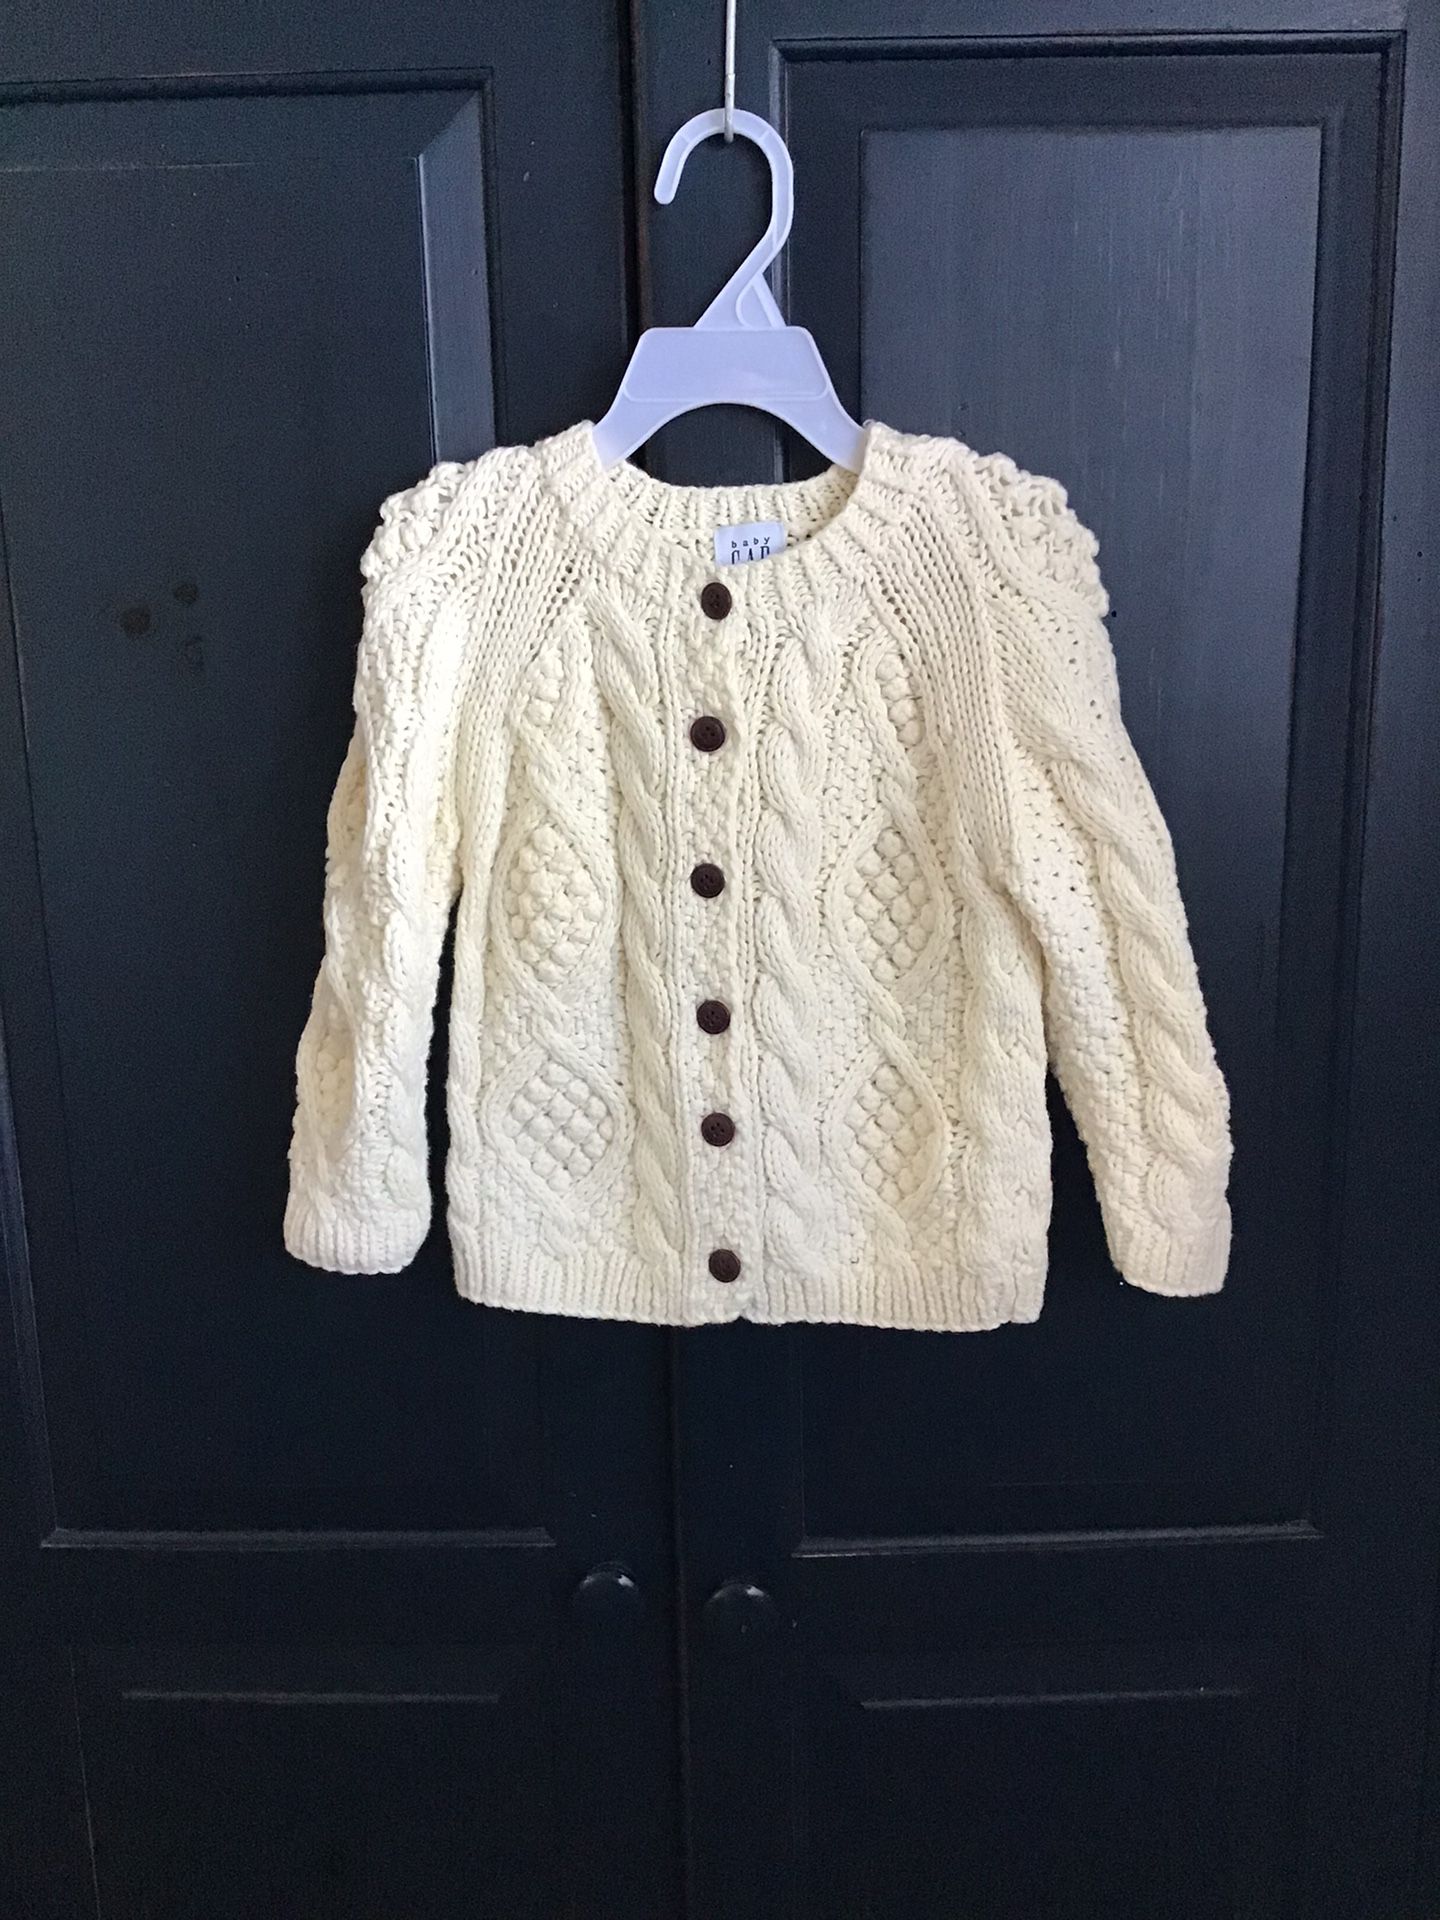 Baby Girls GAP Off-White Warm Knit Button-Down Cardigan Sweater… Size 18–24 Months for in Pt Pleas Bch, NJ - OfferUp